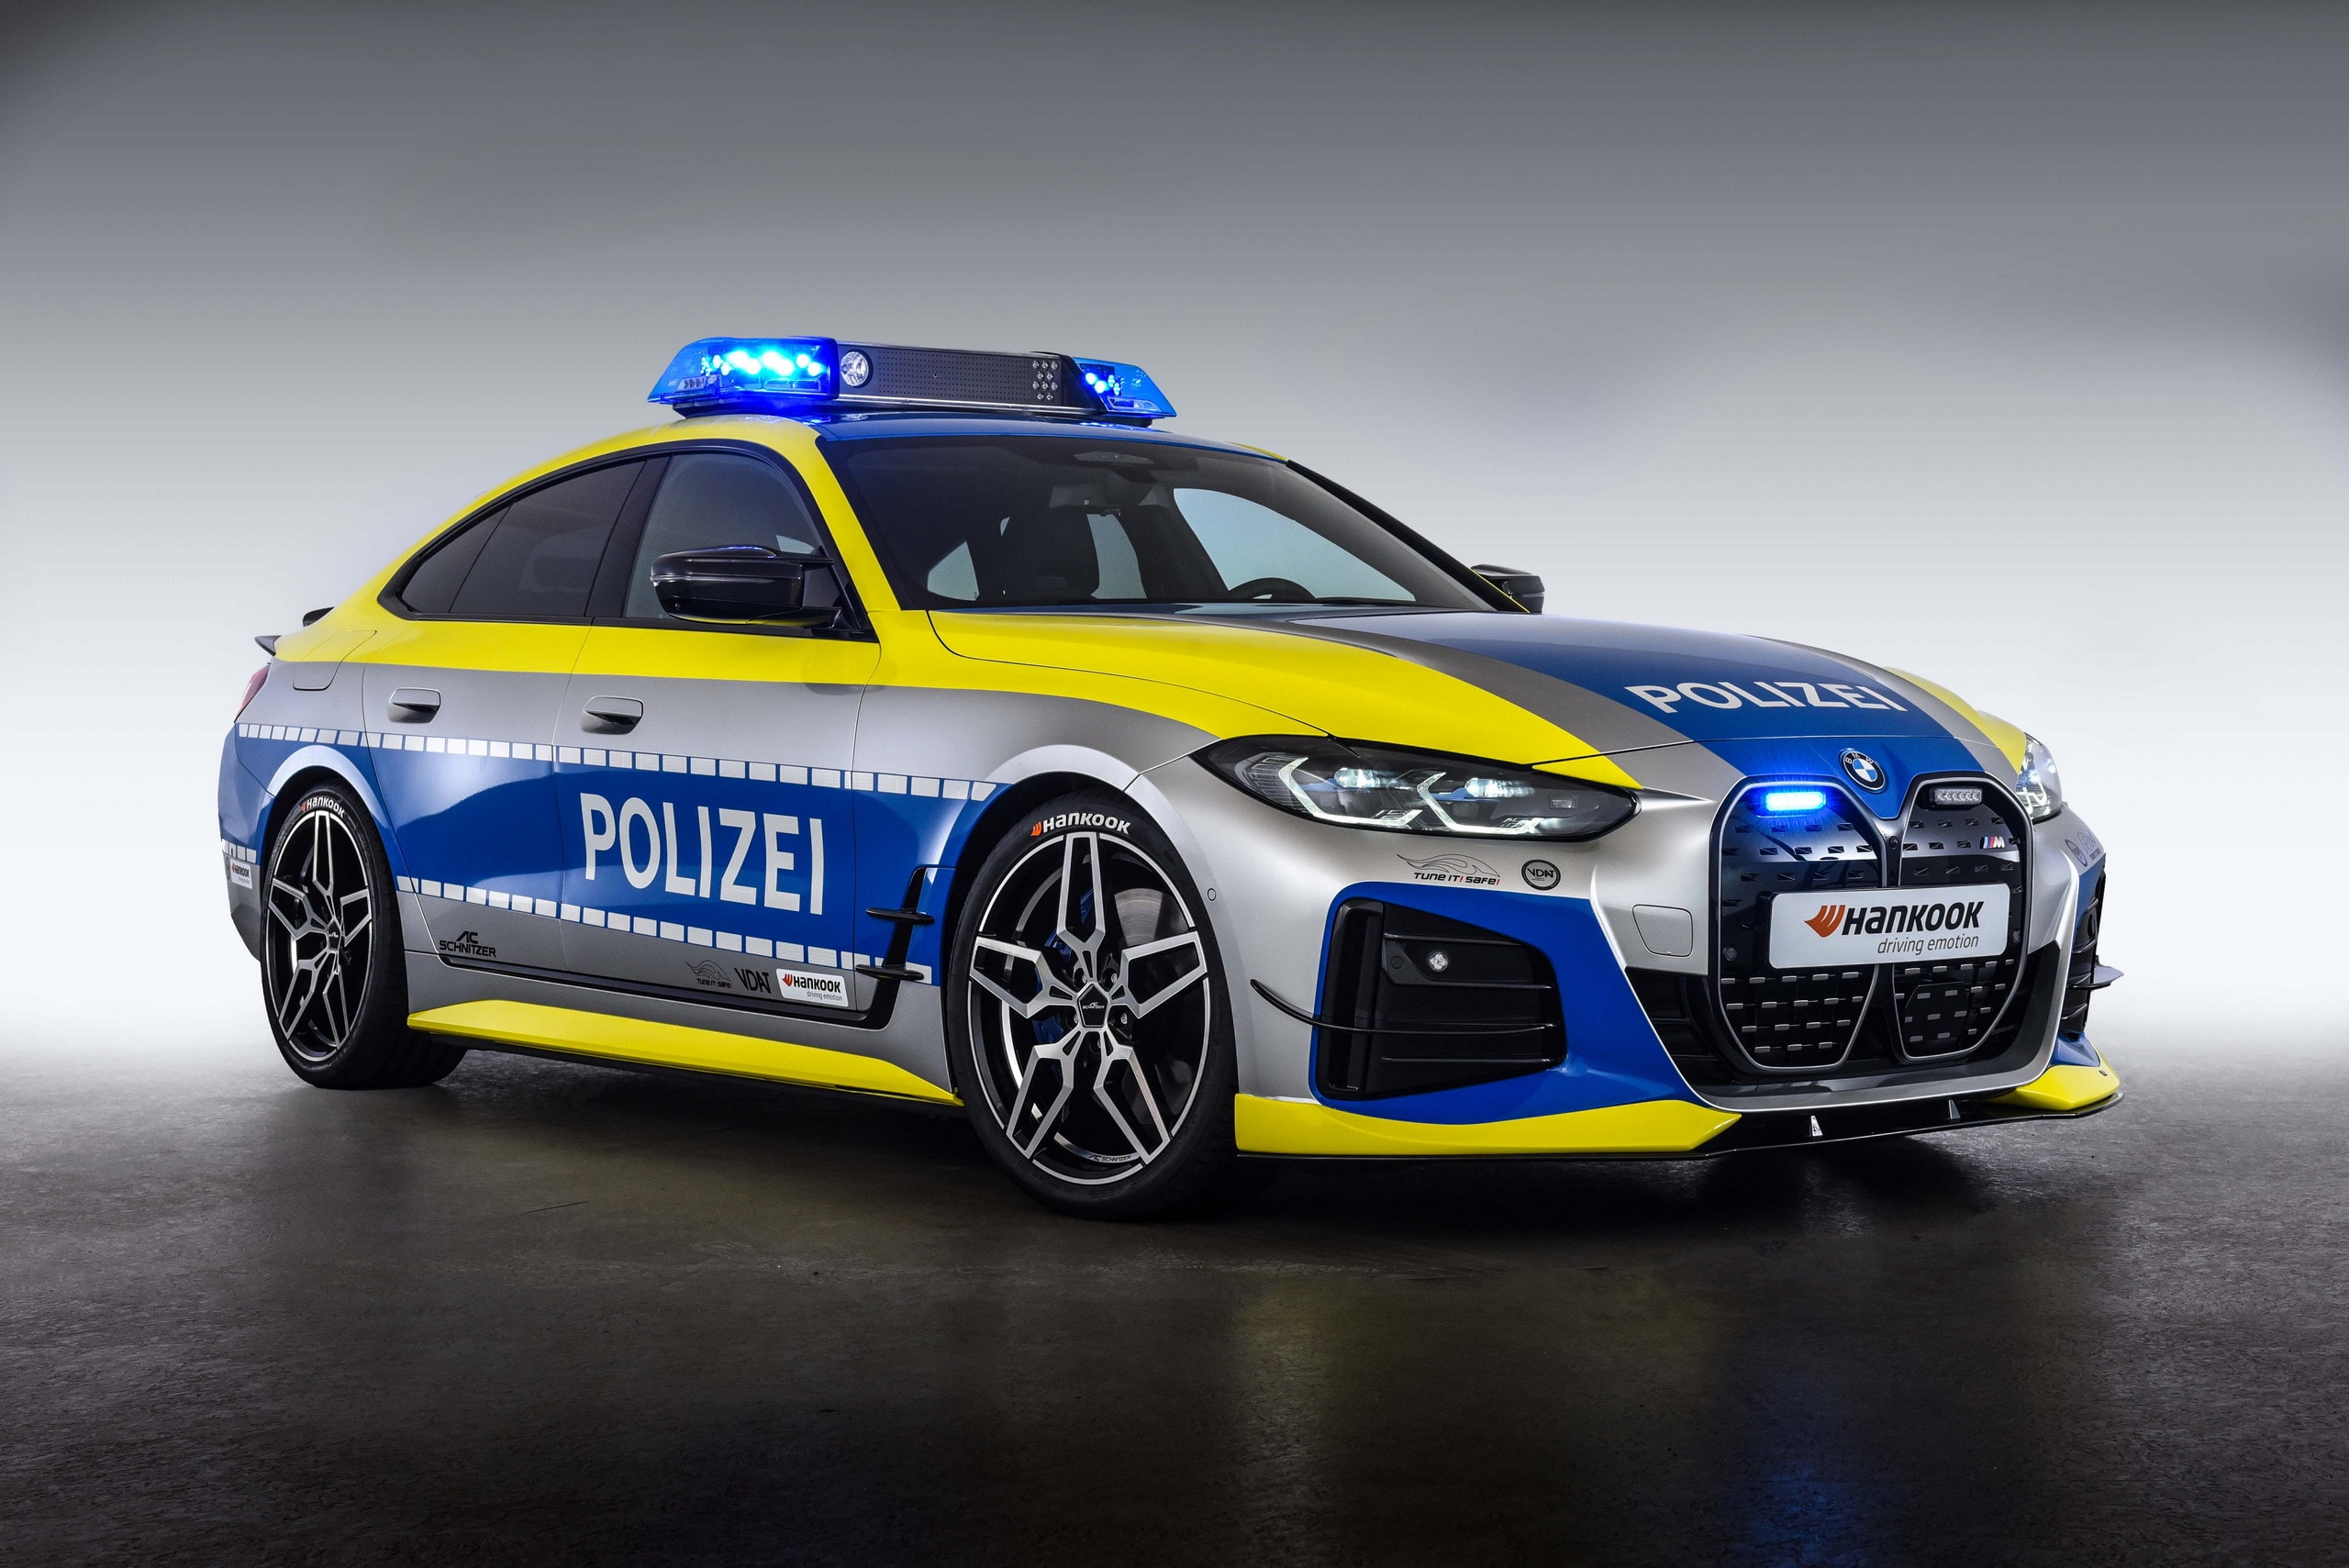 https://s1.cdn.autoevolution.com/images/news/eins-zwei-not-a-polizei-bmw-i4-cop-car-is-a-demo-police-cruiser-at-heart-205609_1.jpg